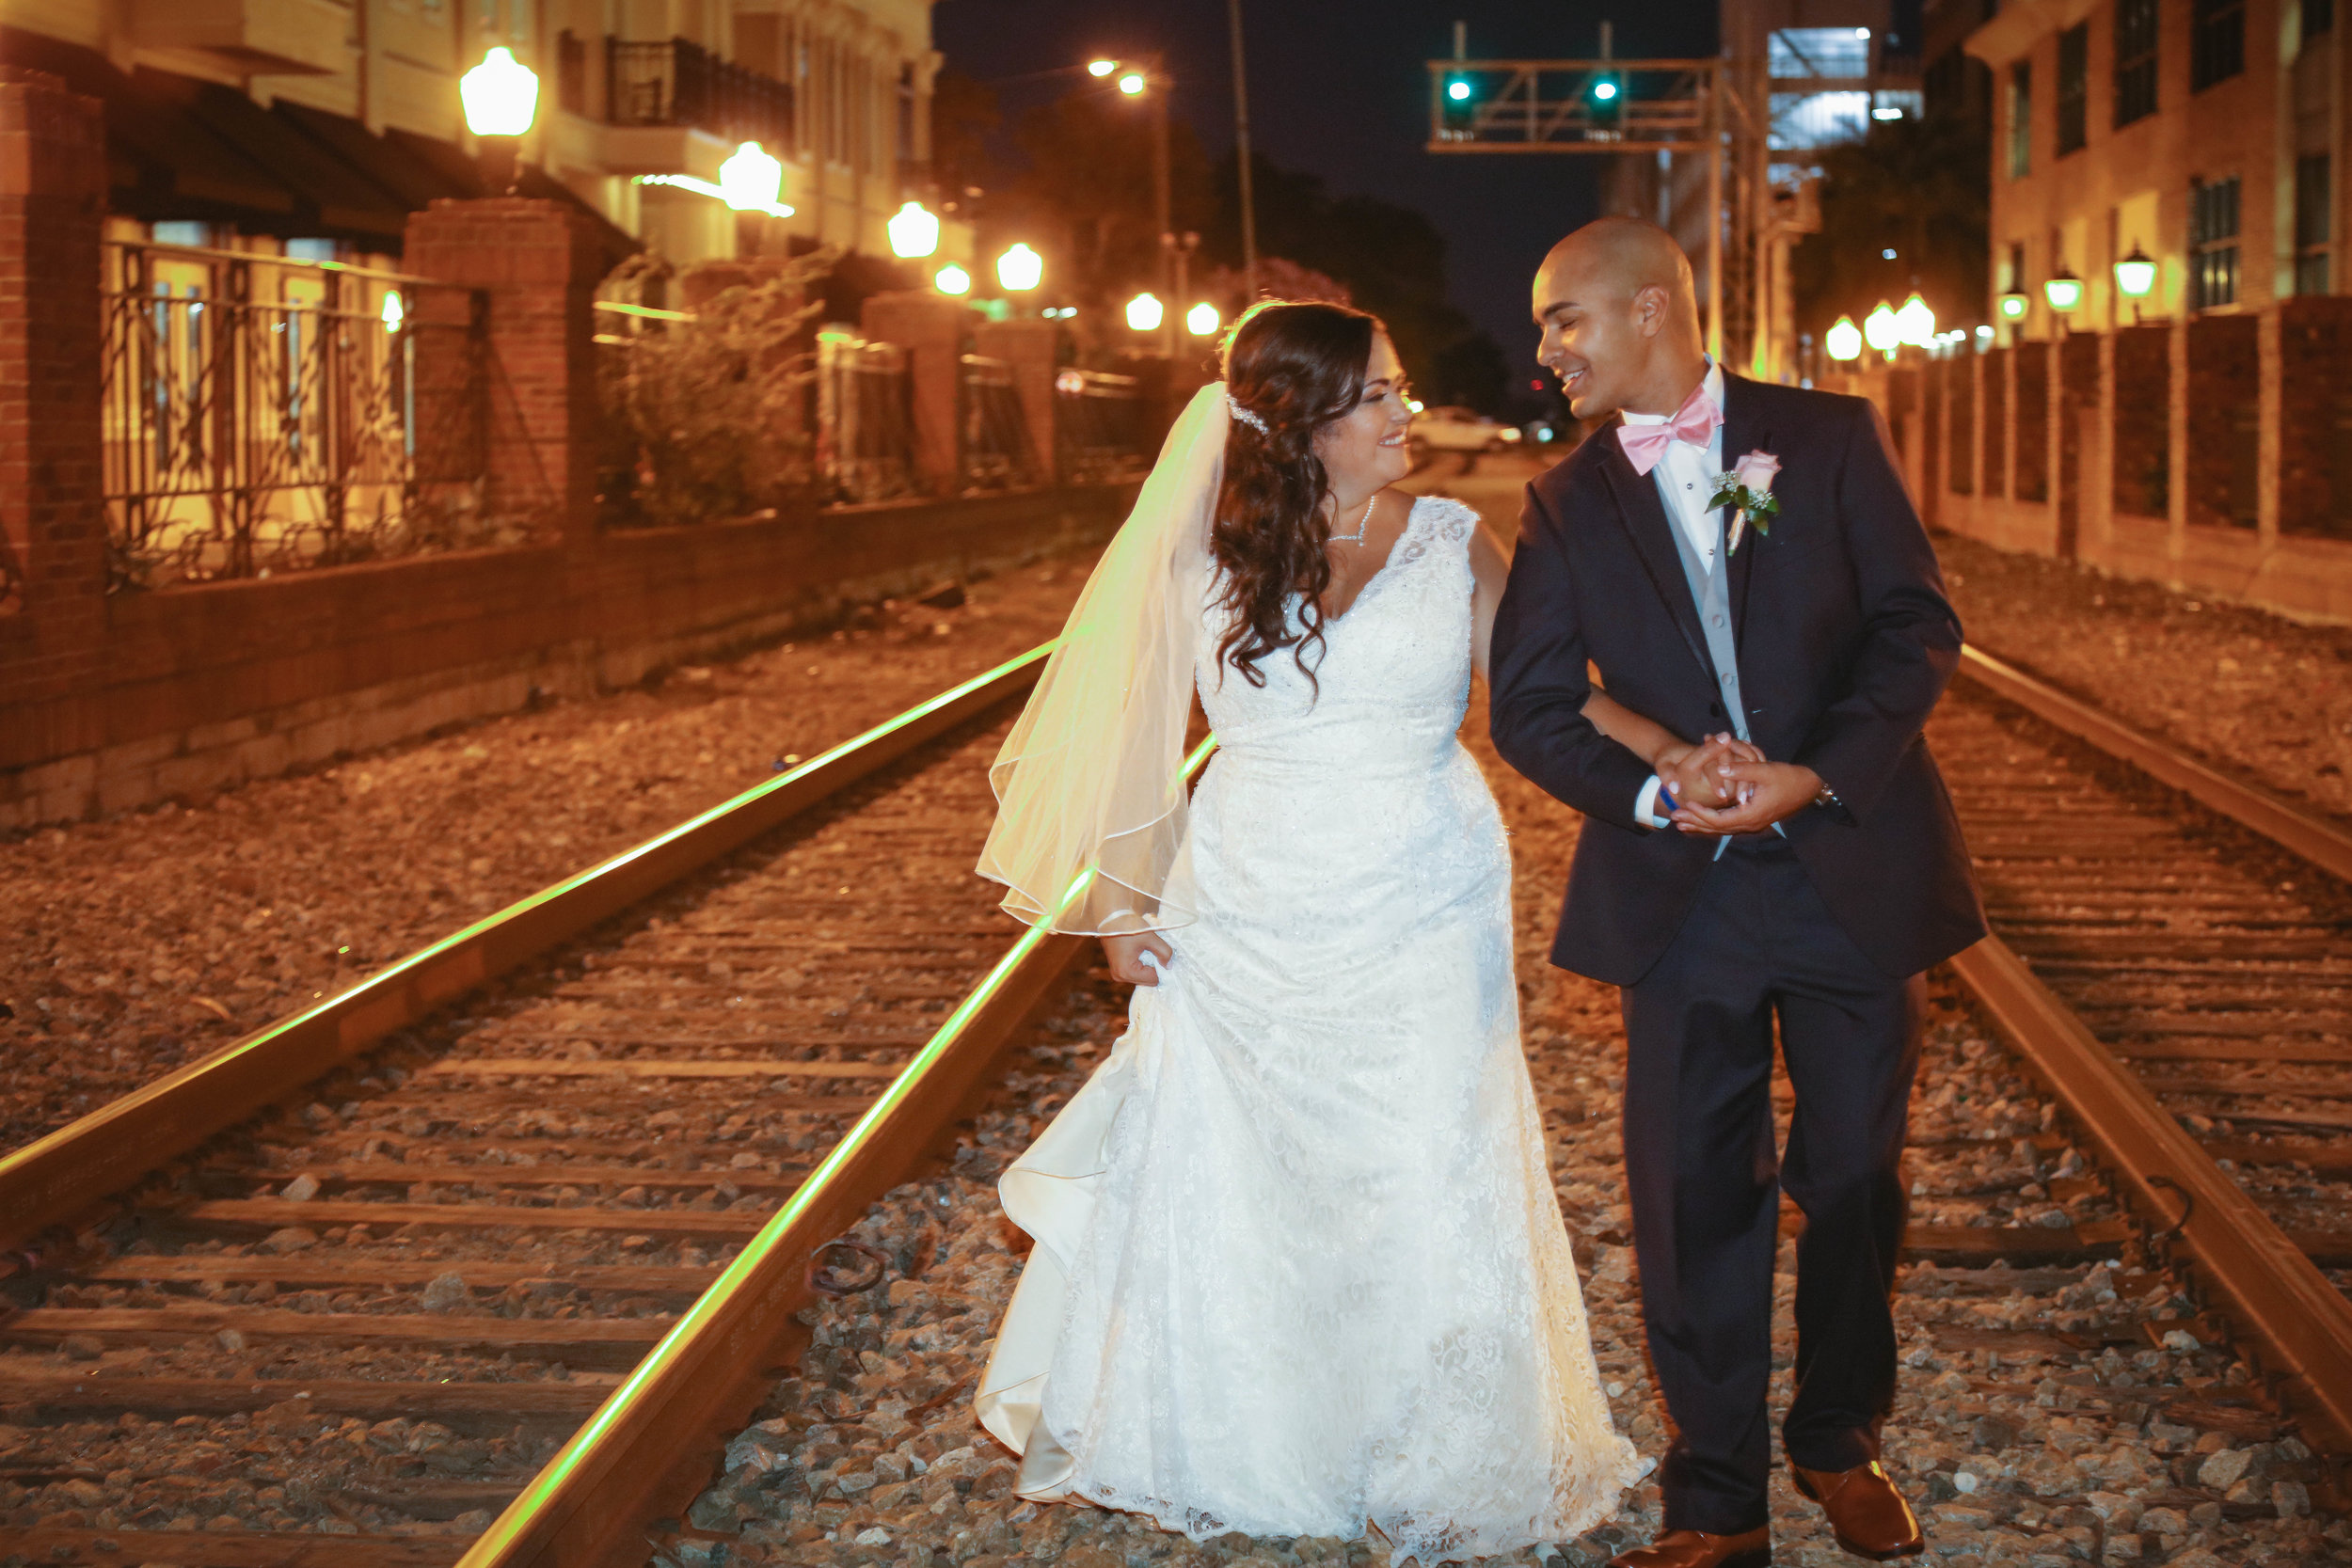 happy relationships, wedding, downtown orlando, wedding photo, railroad, bride, groom